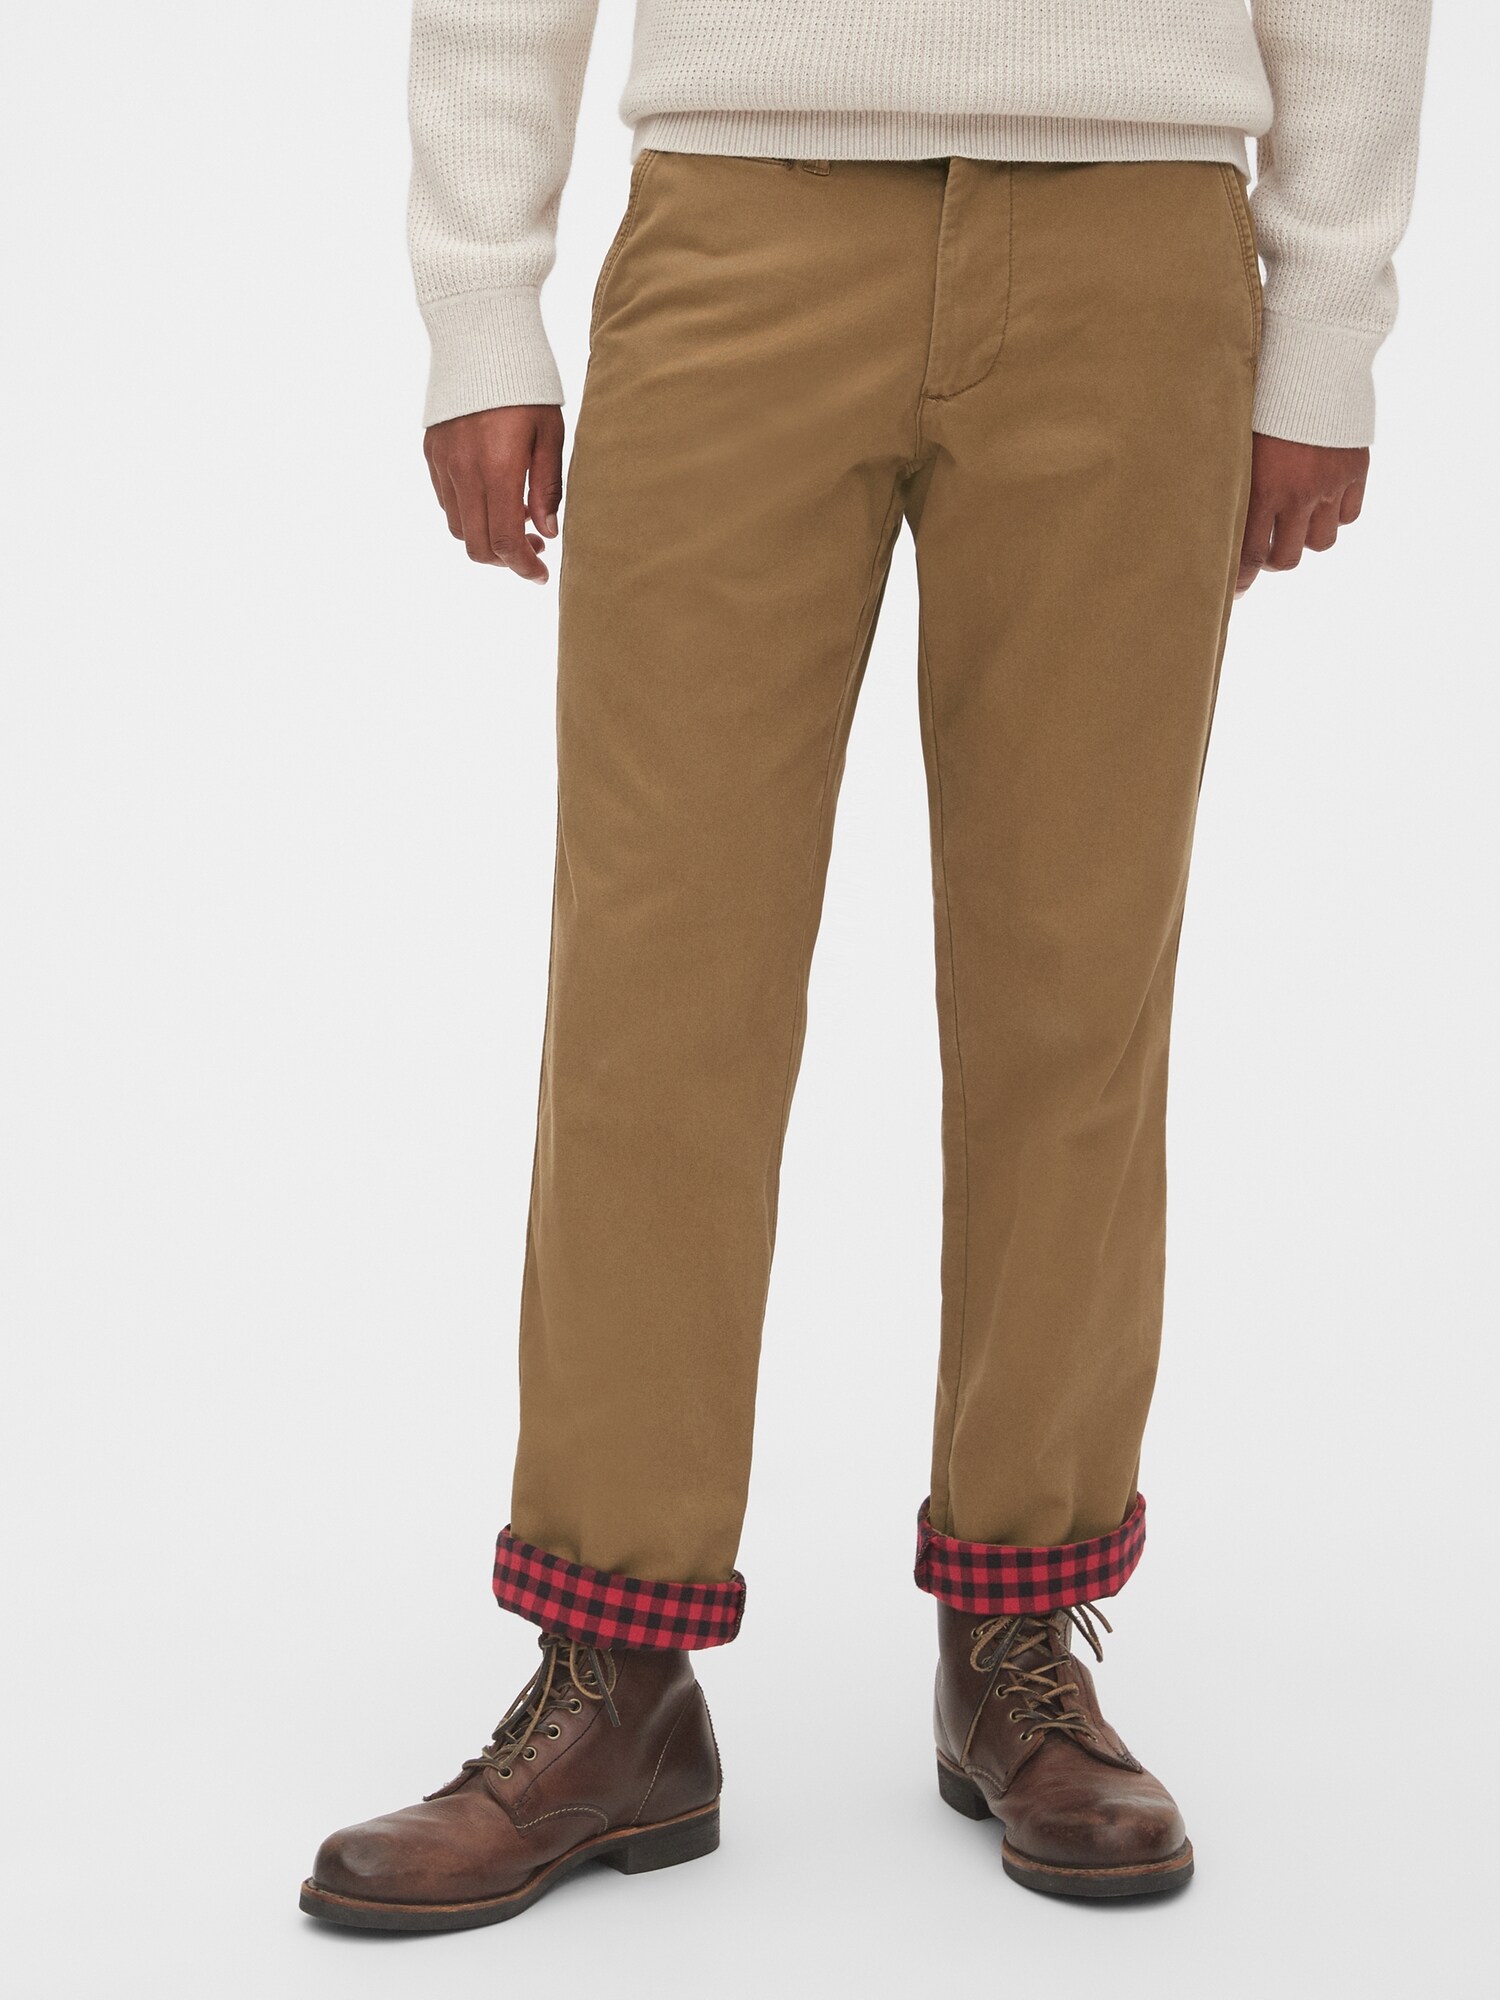 gap lined pants